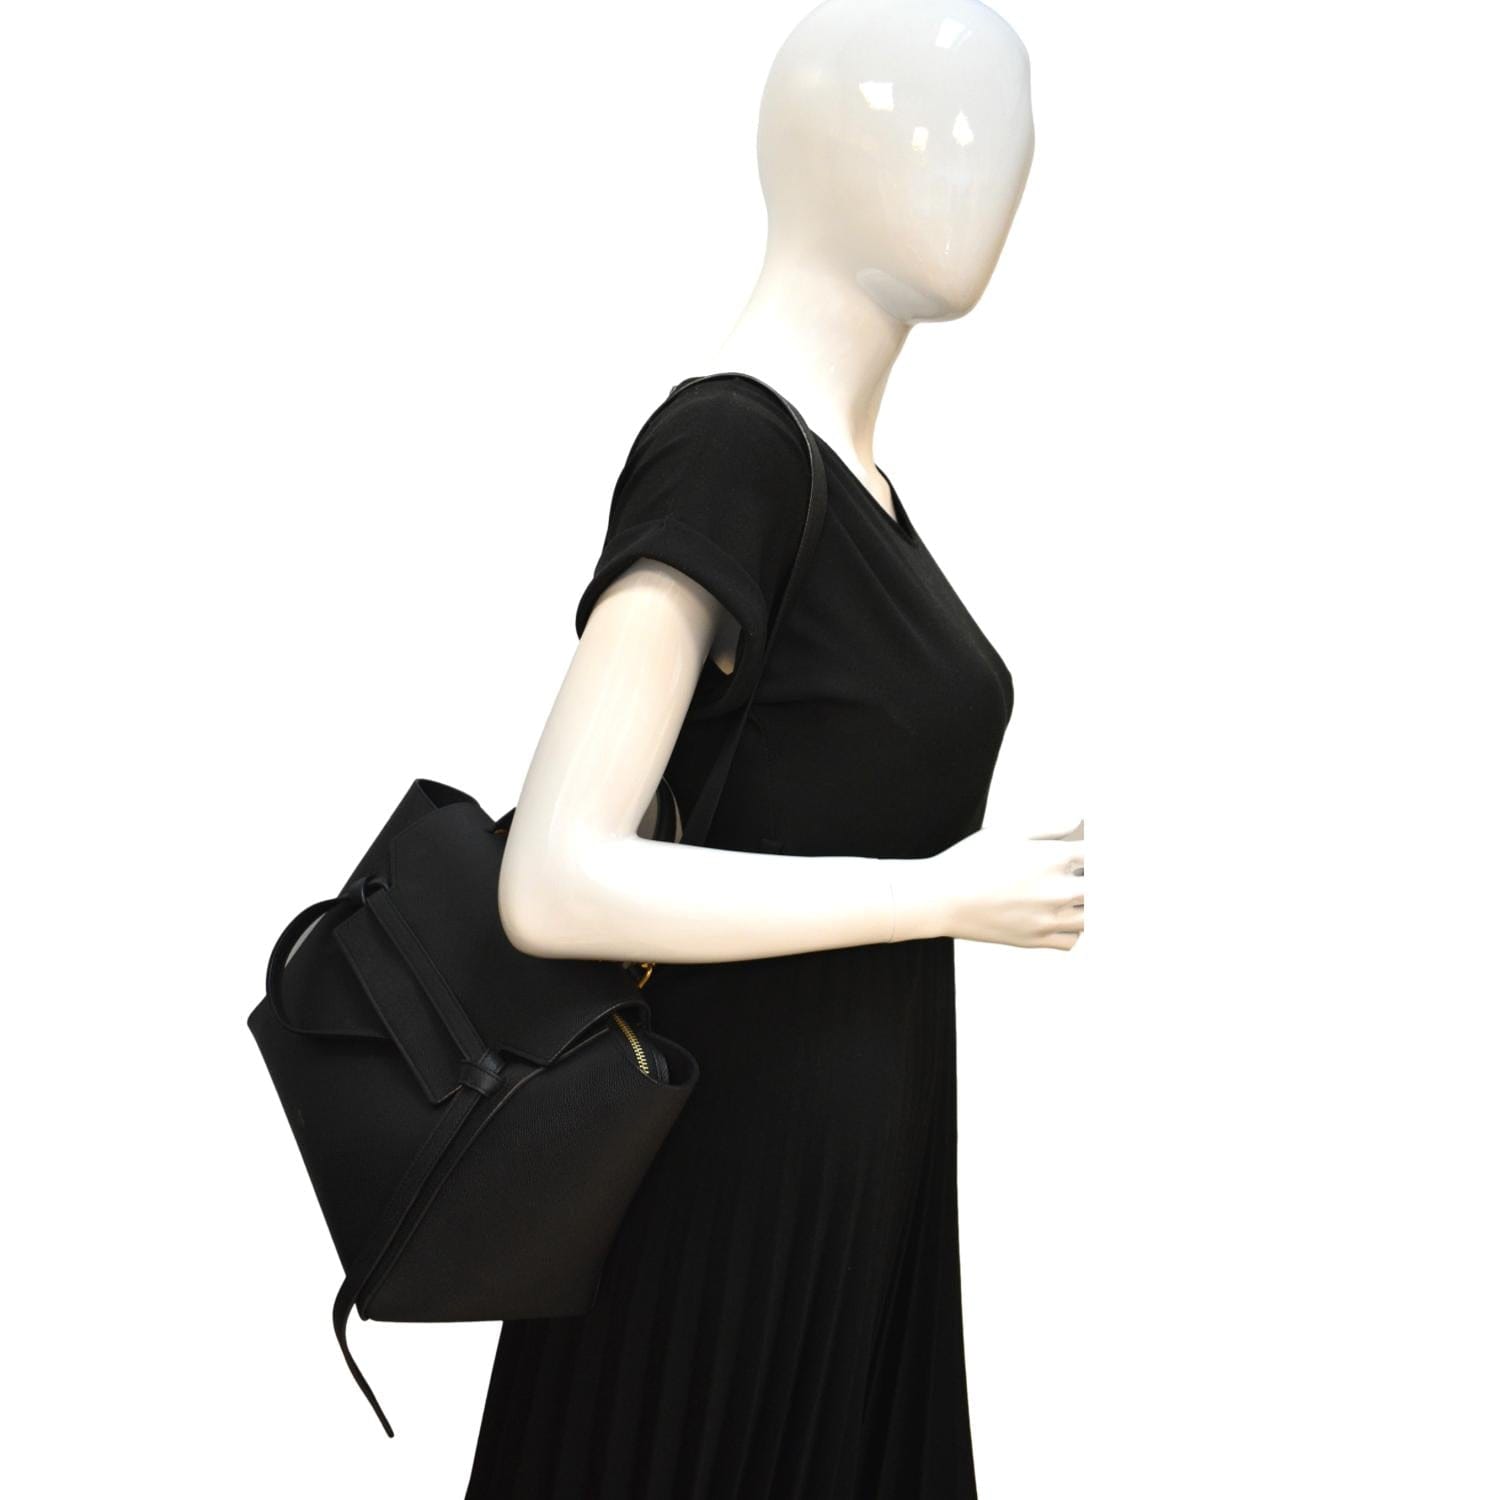 Paris find - Celine Nano Belt Bag in e : r/handbags